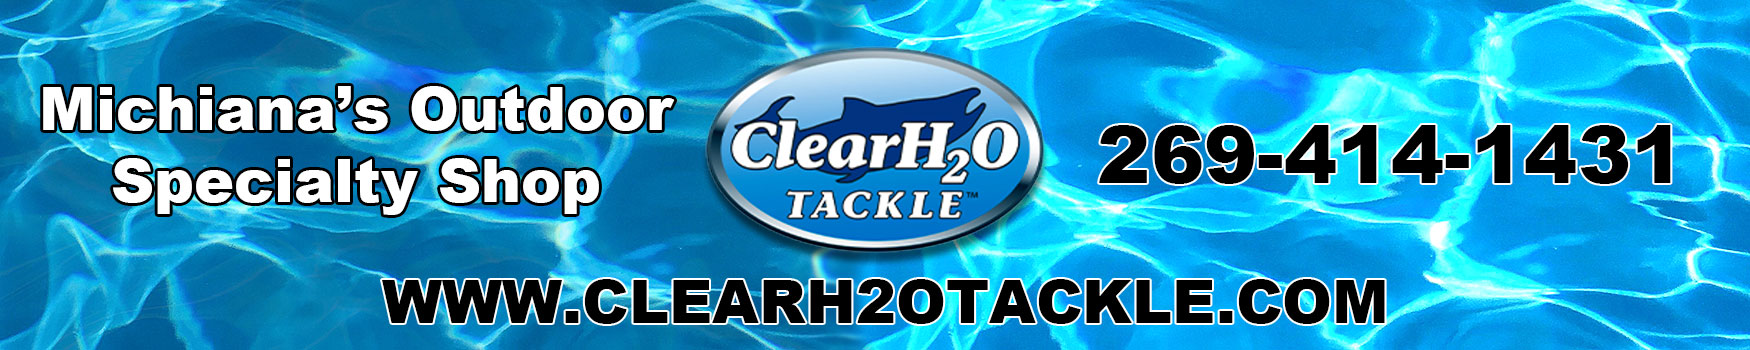 Clear H2O Tackle